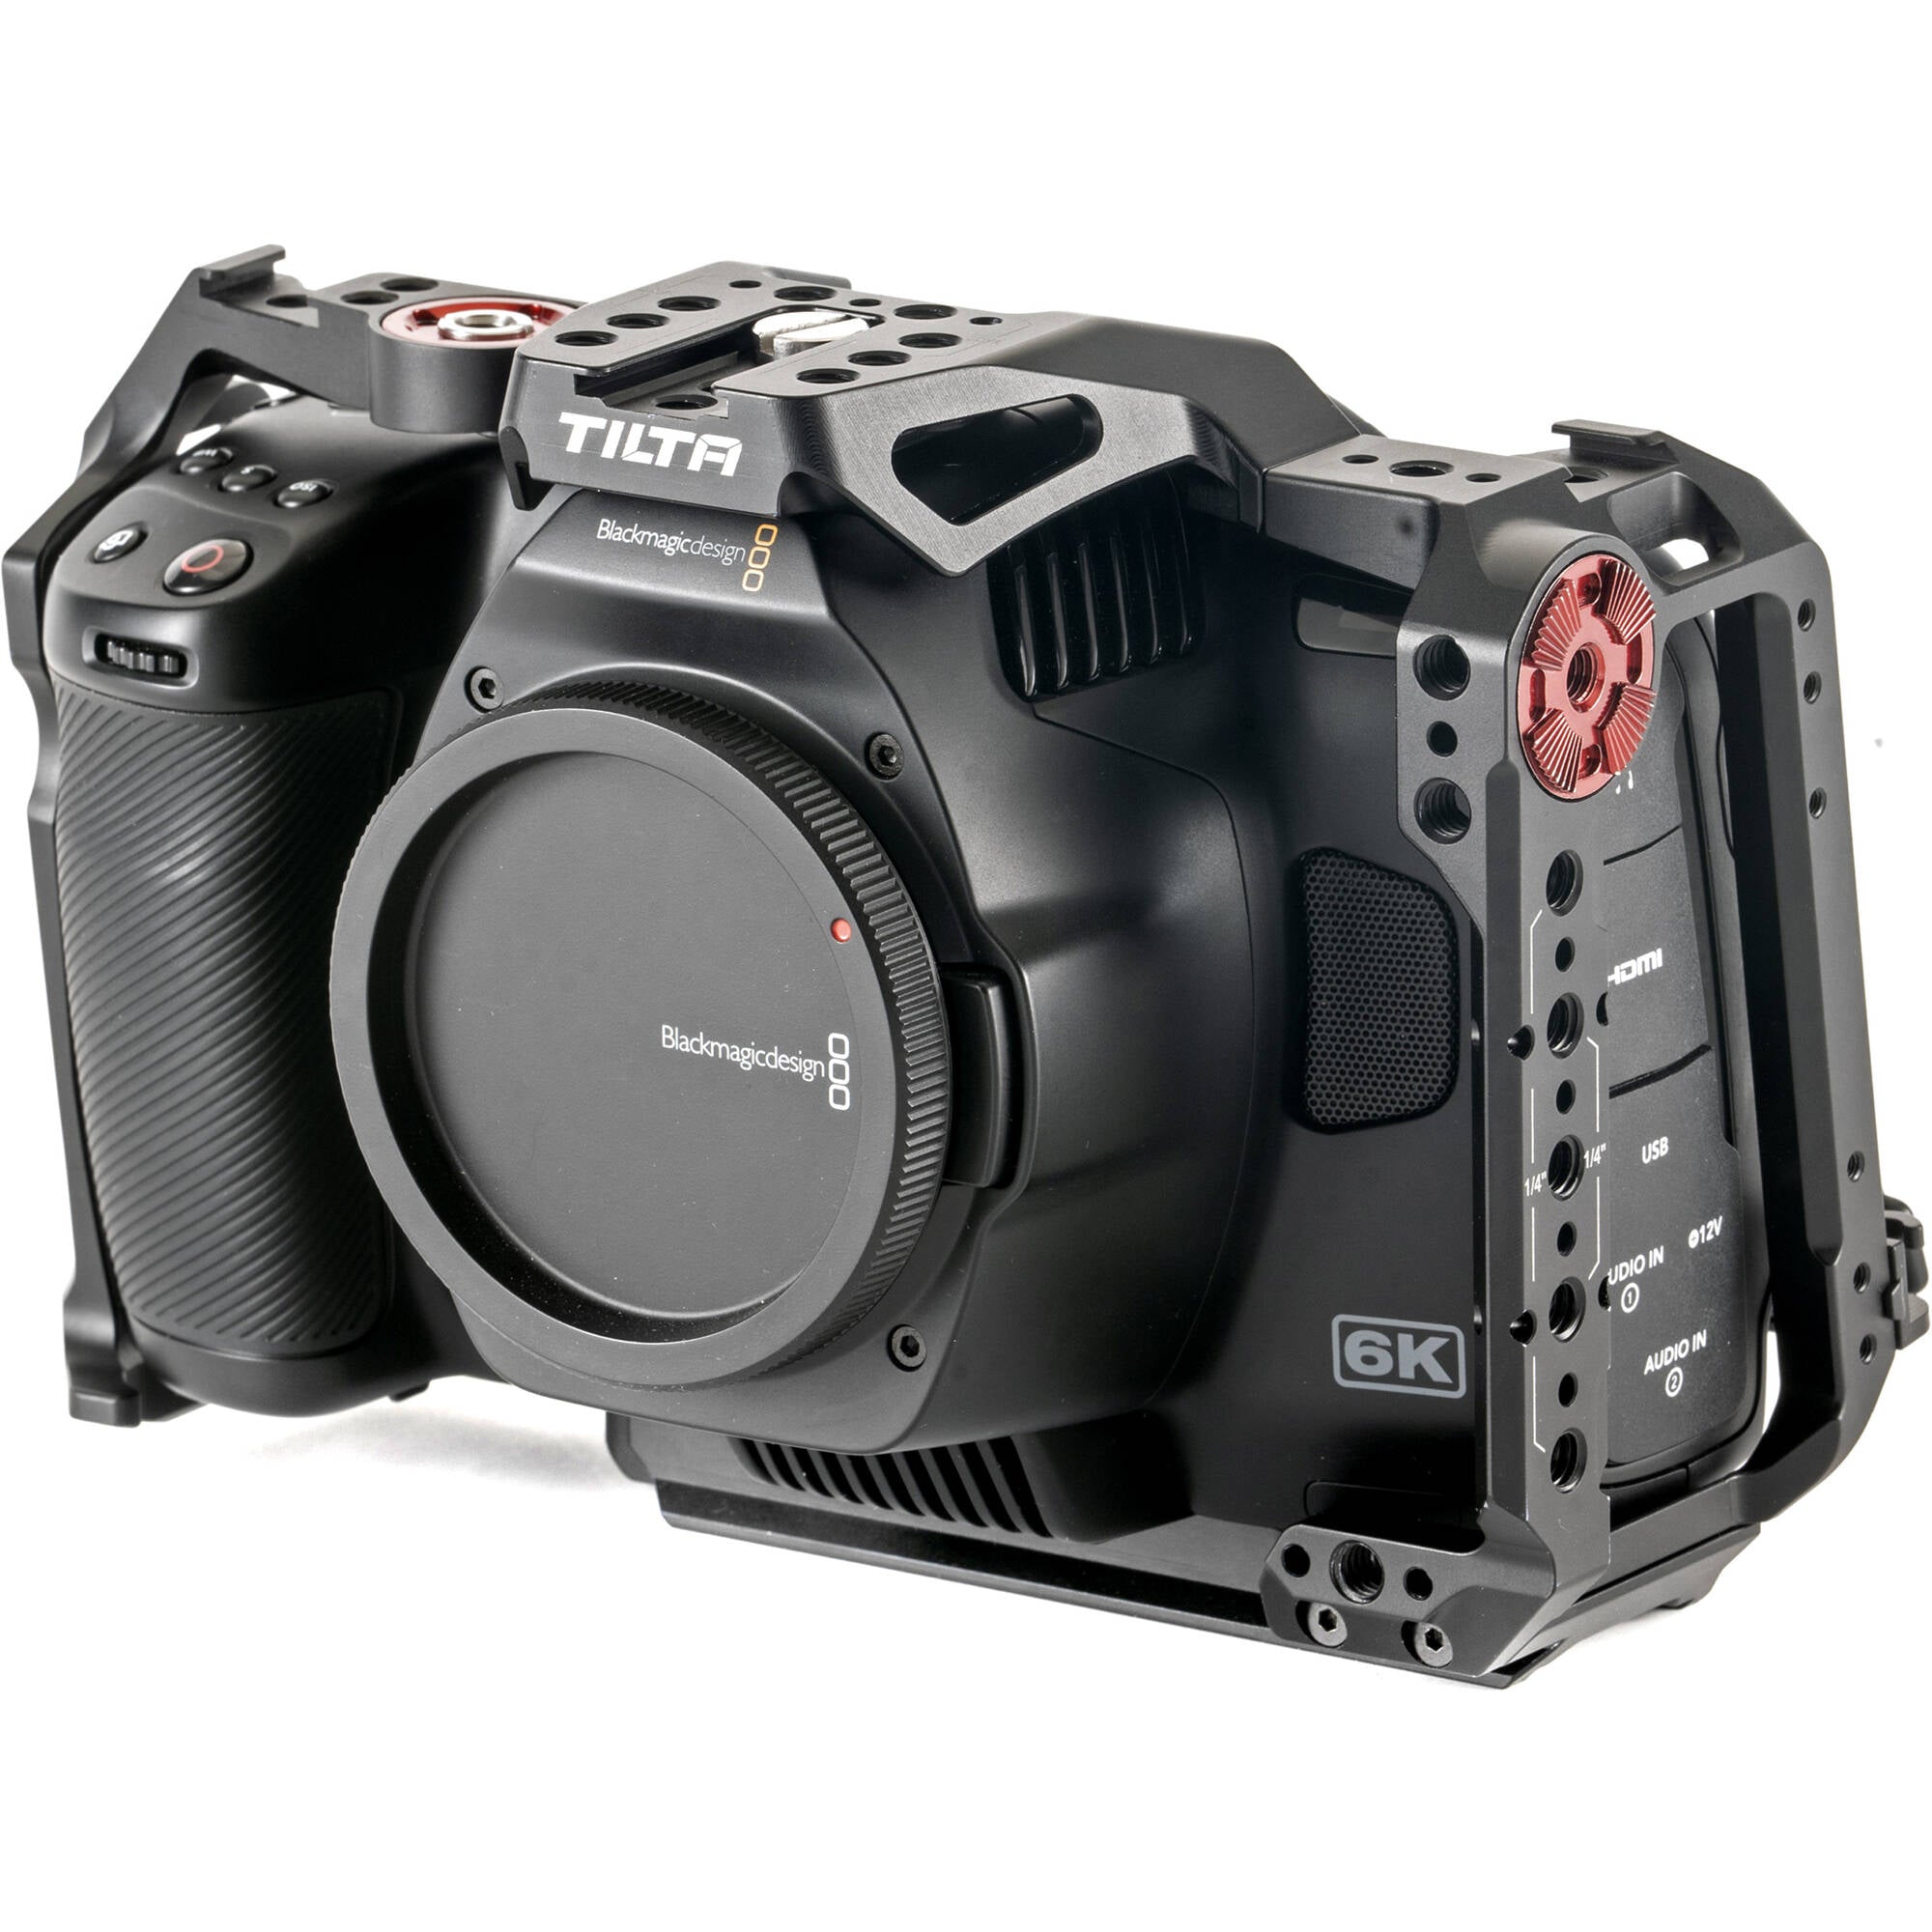 Tilta Full Camera Cage for BMPCC 6K Pro/G2/BMPCC 6K (Black)